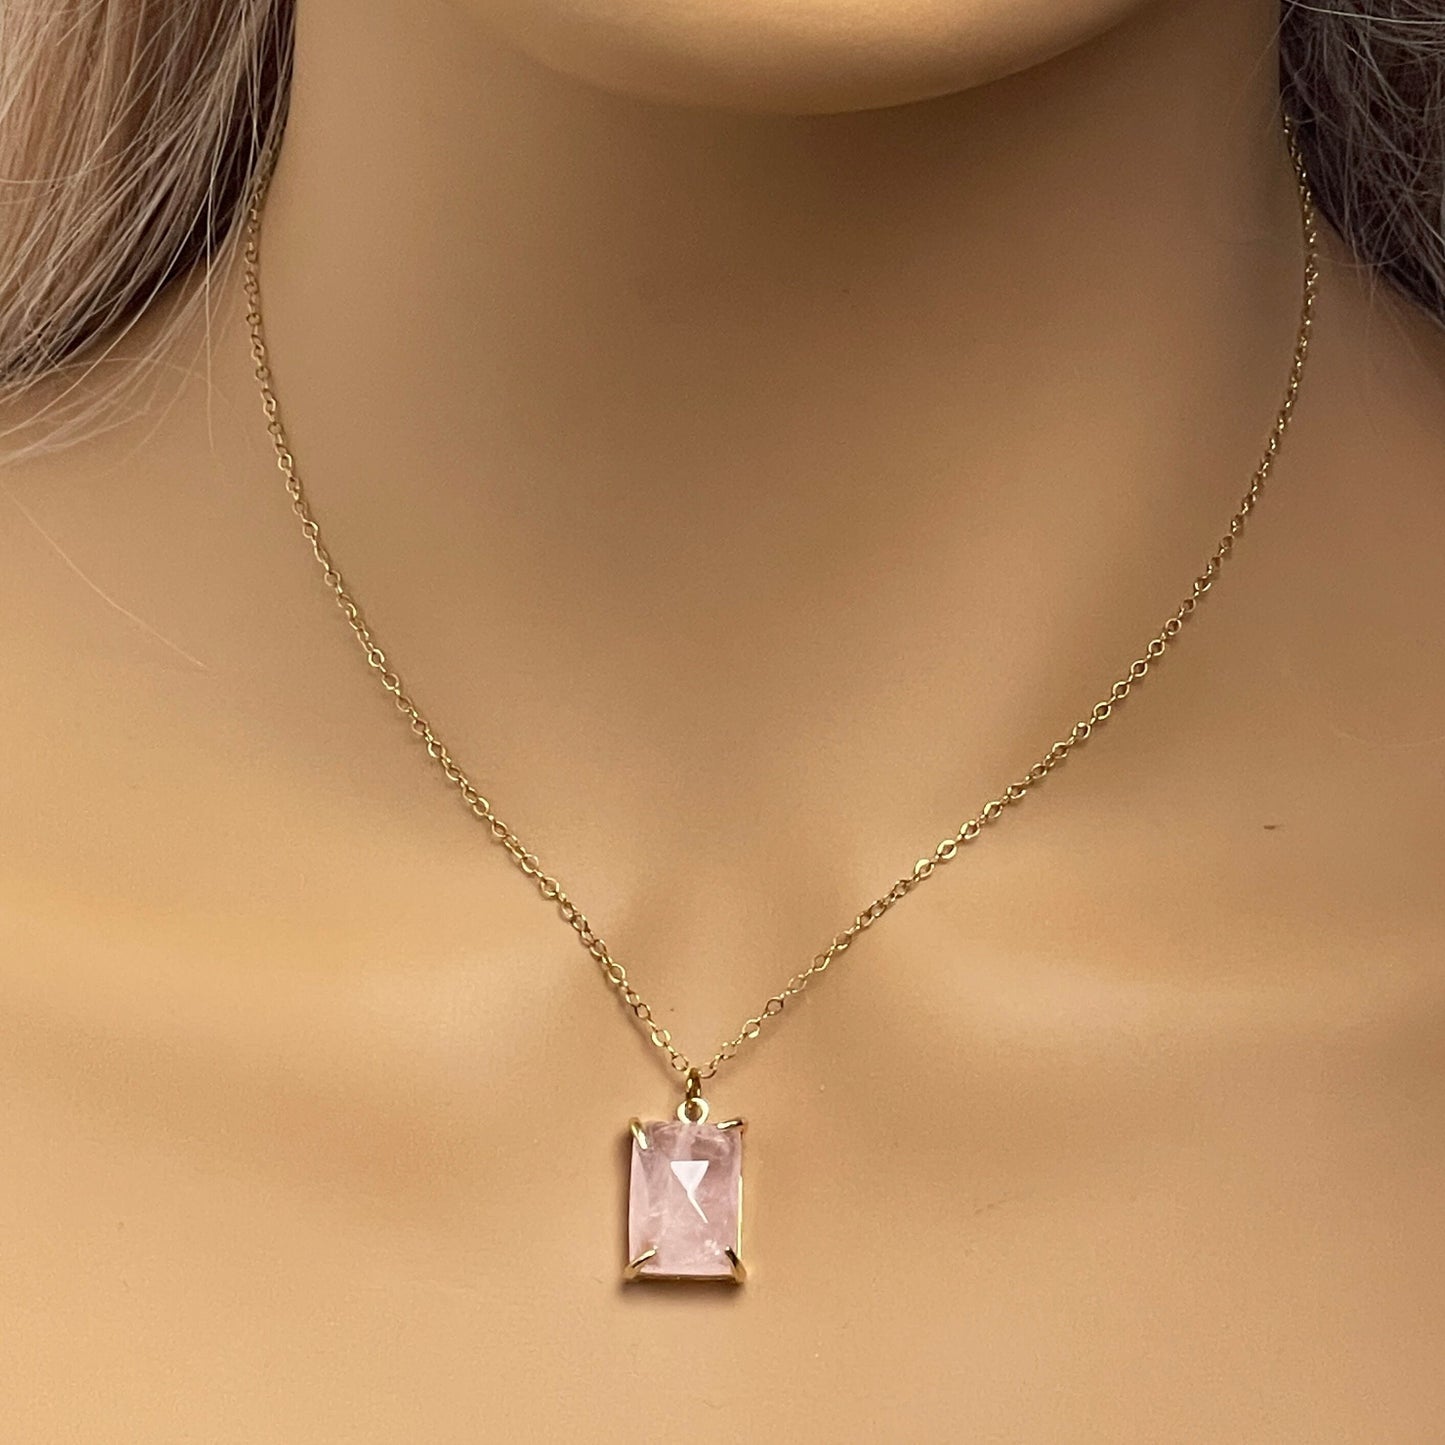 Unique Pink Gemstone Necklace Gold, Rose Quartz Pendant, Rectangle Stone For Layering, Christmas Gift Women, M6-163